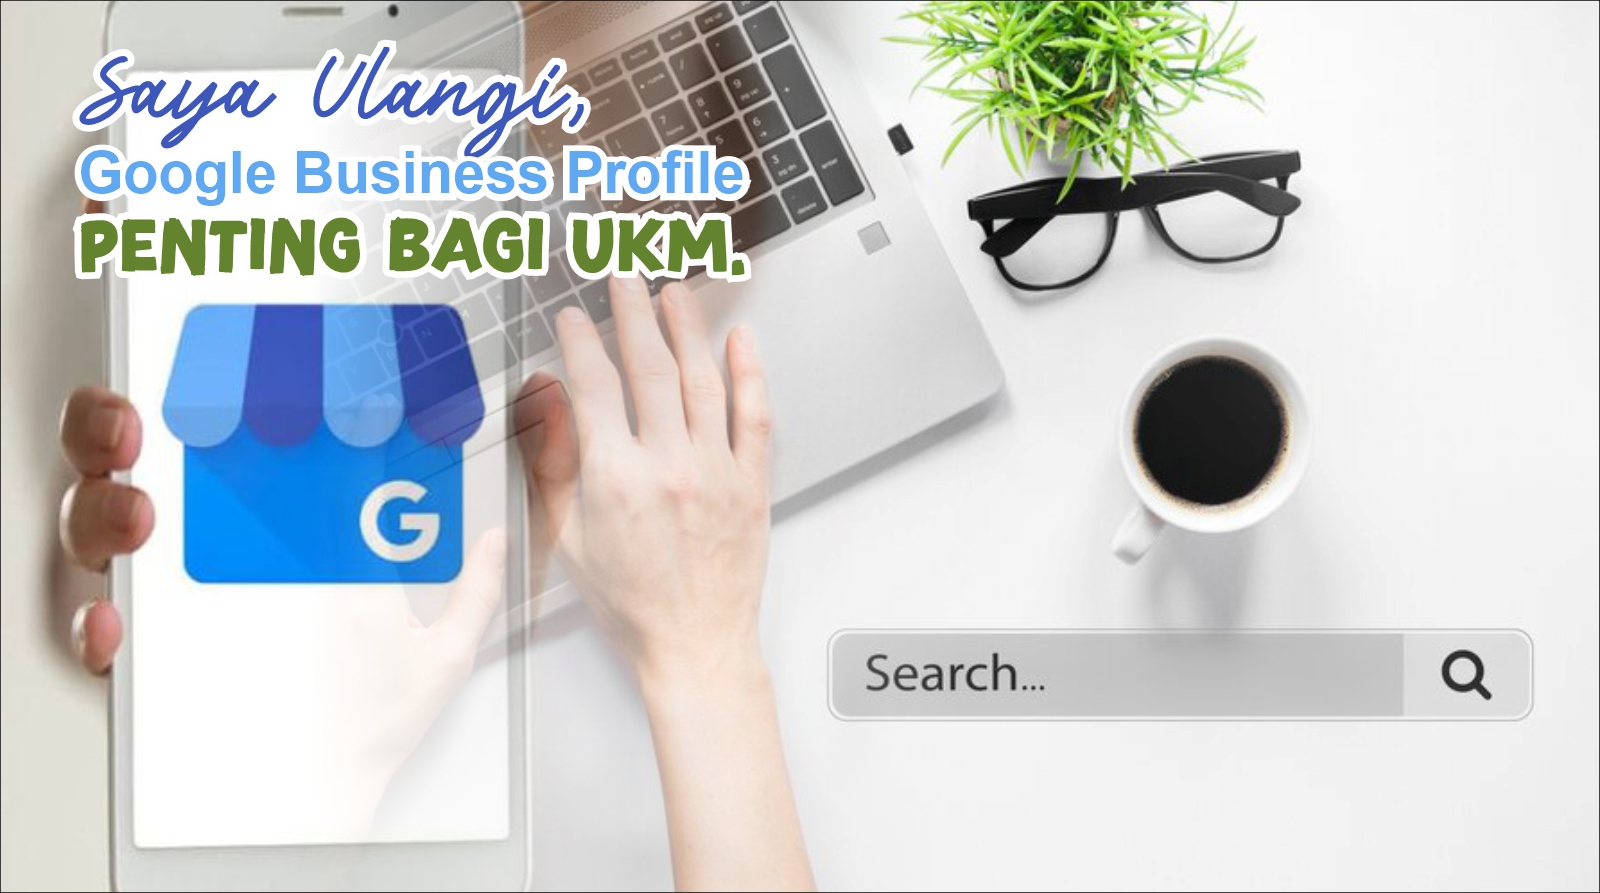 Google Business Profile Penting Bagi UKM